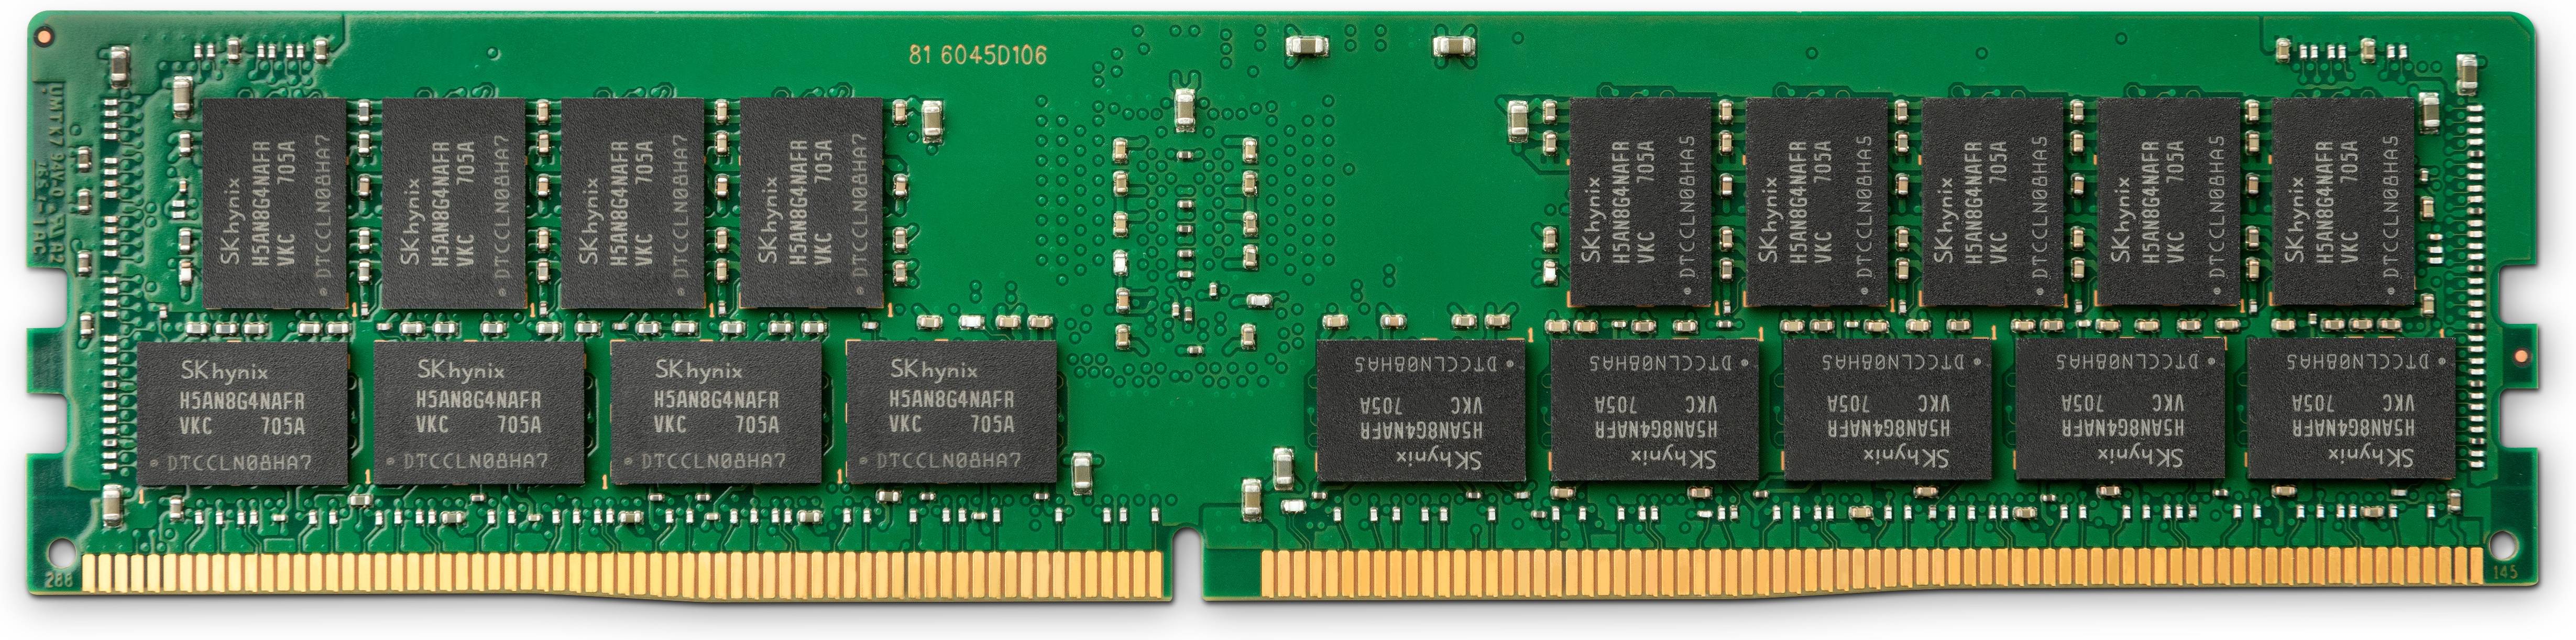 Rca Informatique - Image du produit : 32GB DDR4-2933 (1X32GB) ECC REGRAM